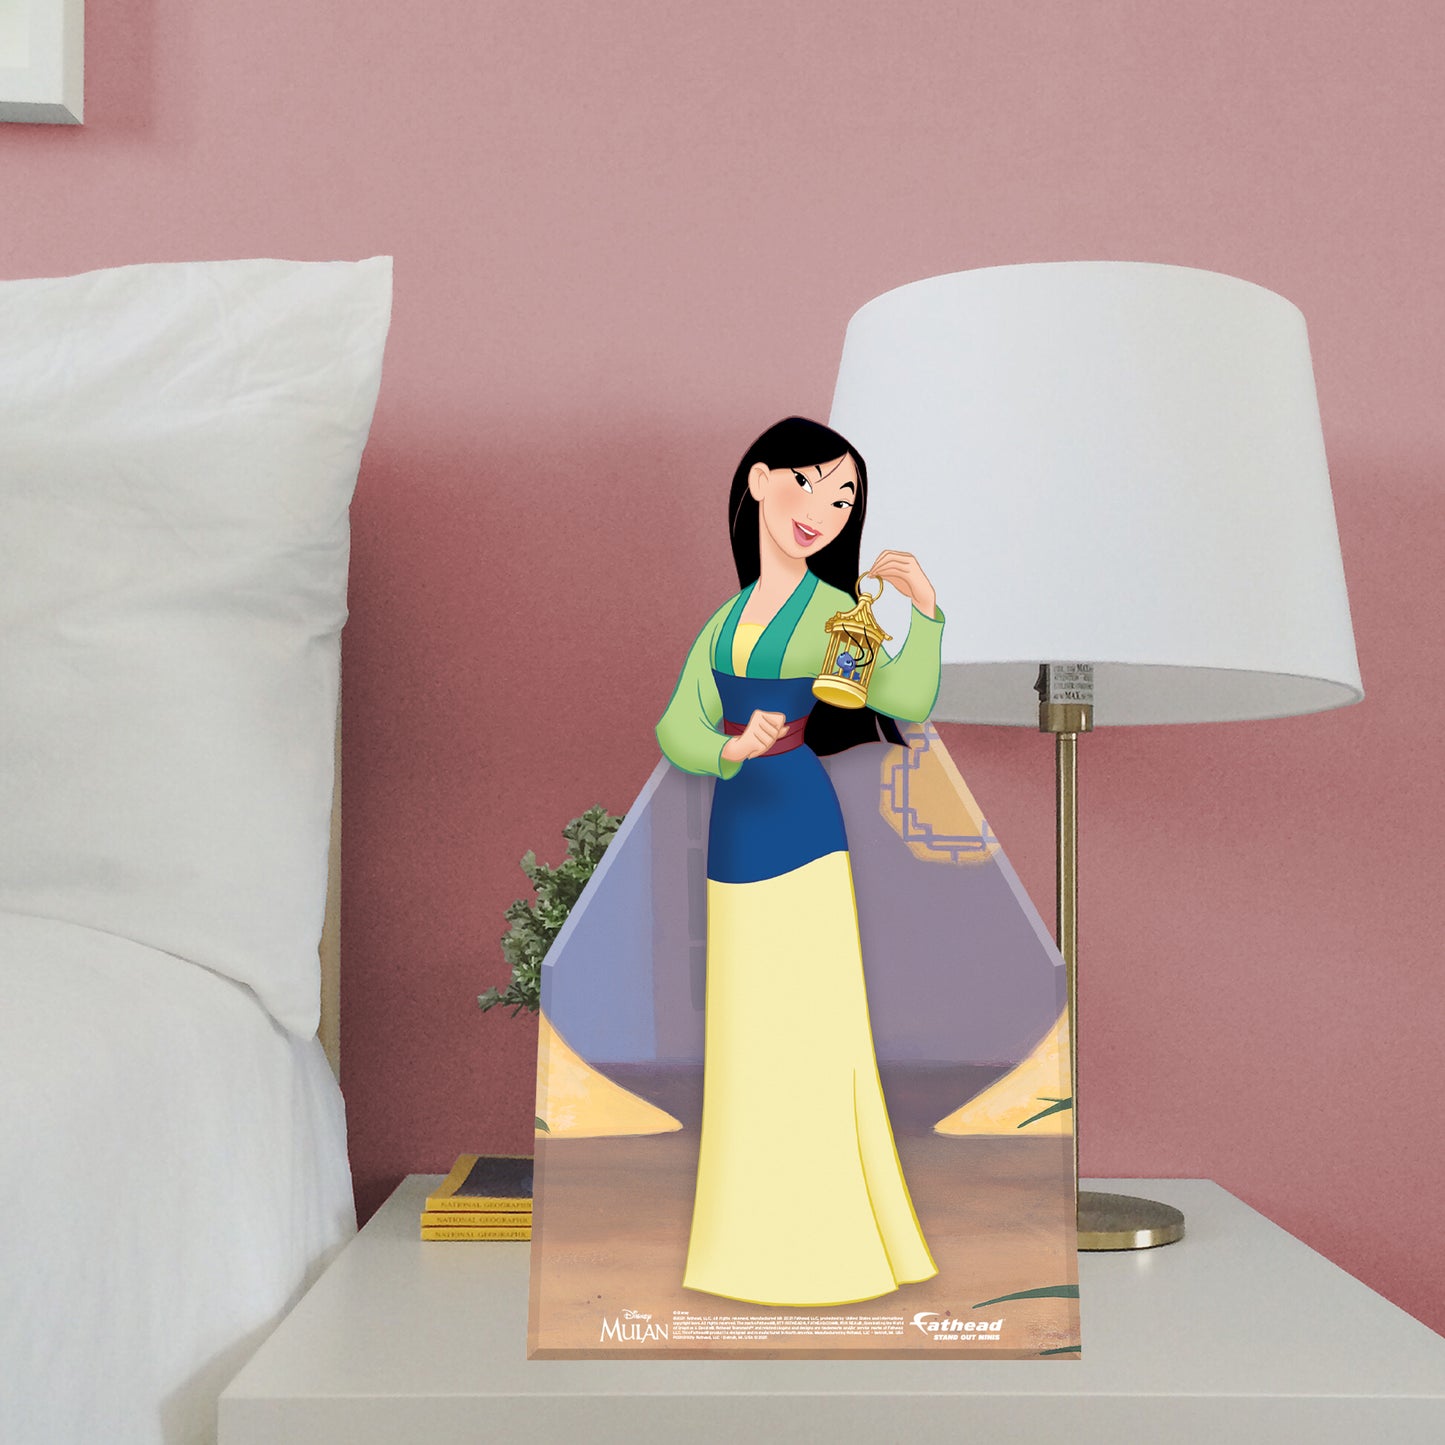 Disney Princess Digital paper Scrapbooking Mulan - Party and Craft